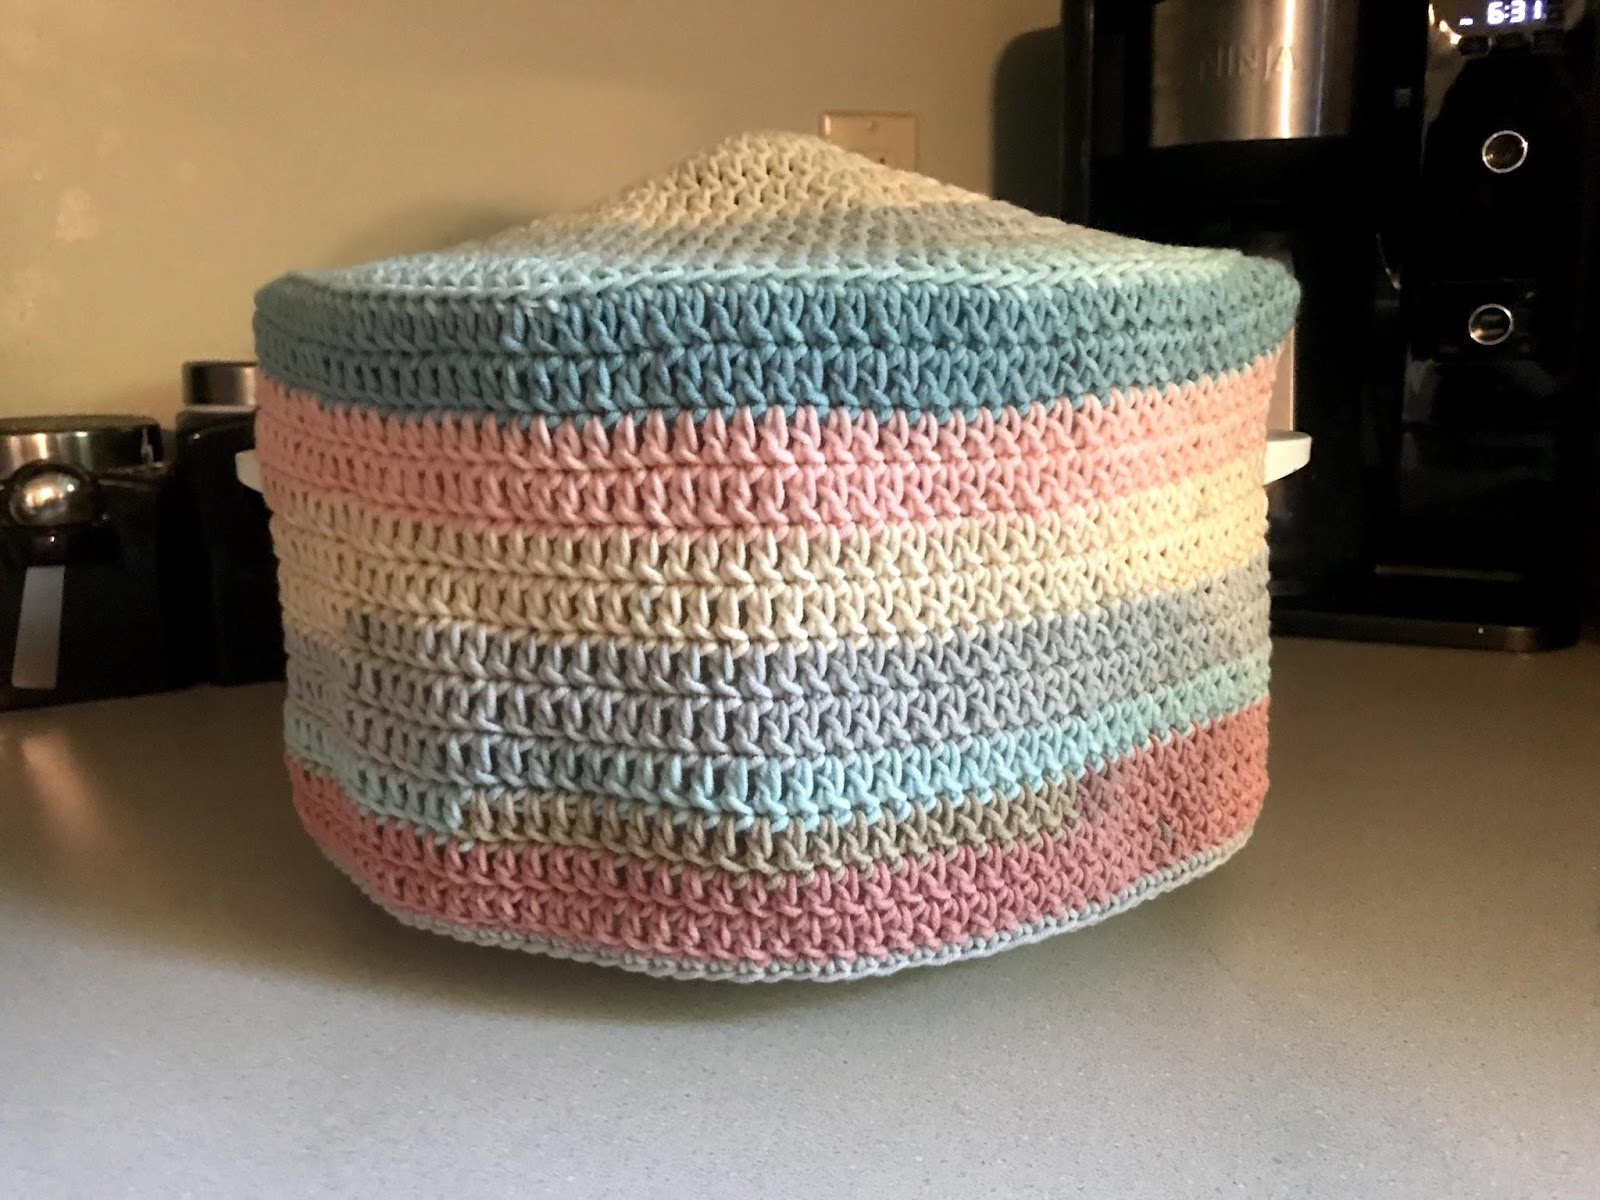 4 quart Hamilton Beach crockpot cover crochet pattern for slow cooker